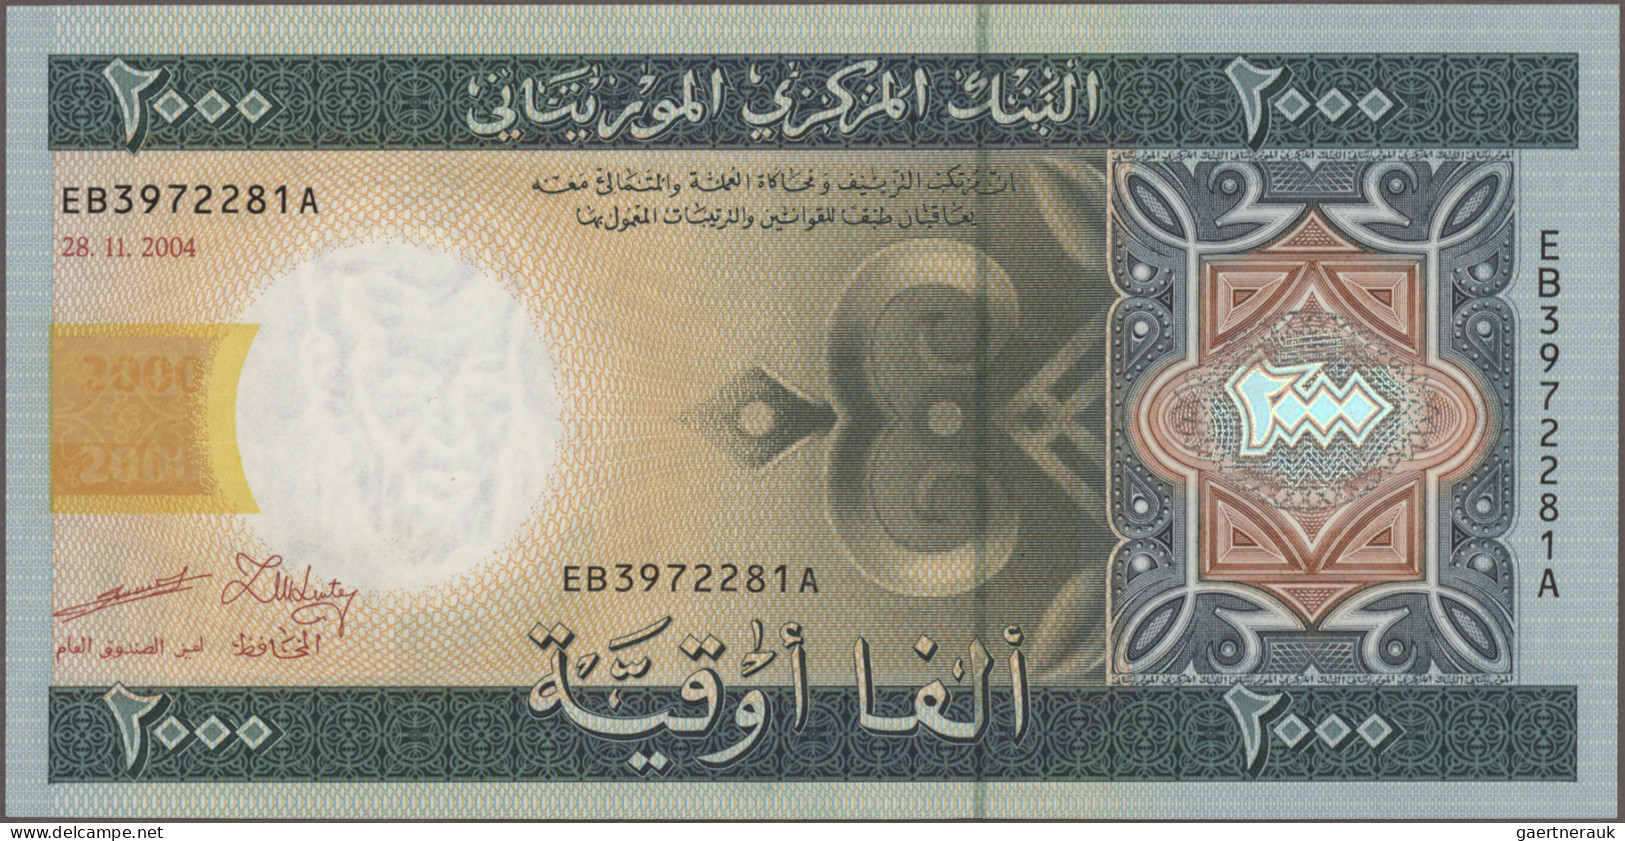 Mauritania: Banque Centrale De Mauritanie, Huge Lot With 14 Banknotes, 1985-2012 - Mauritanie